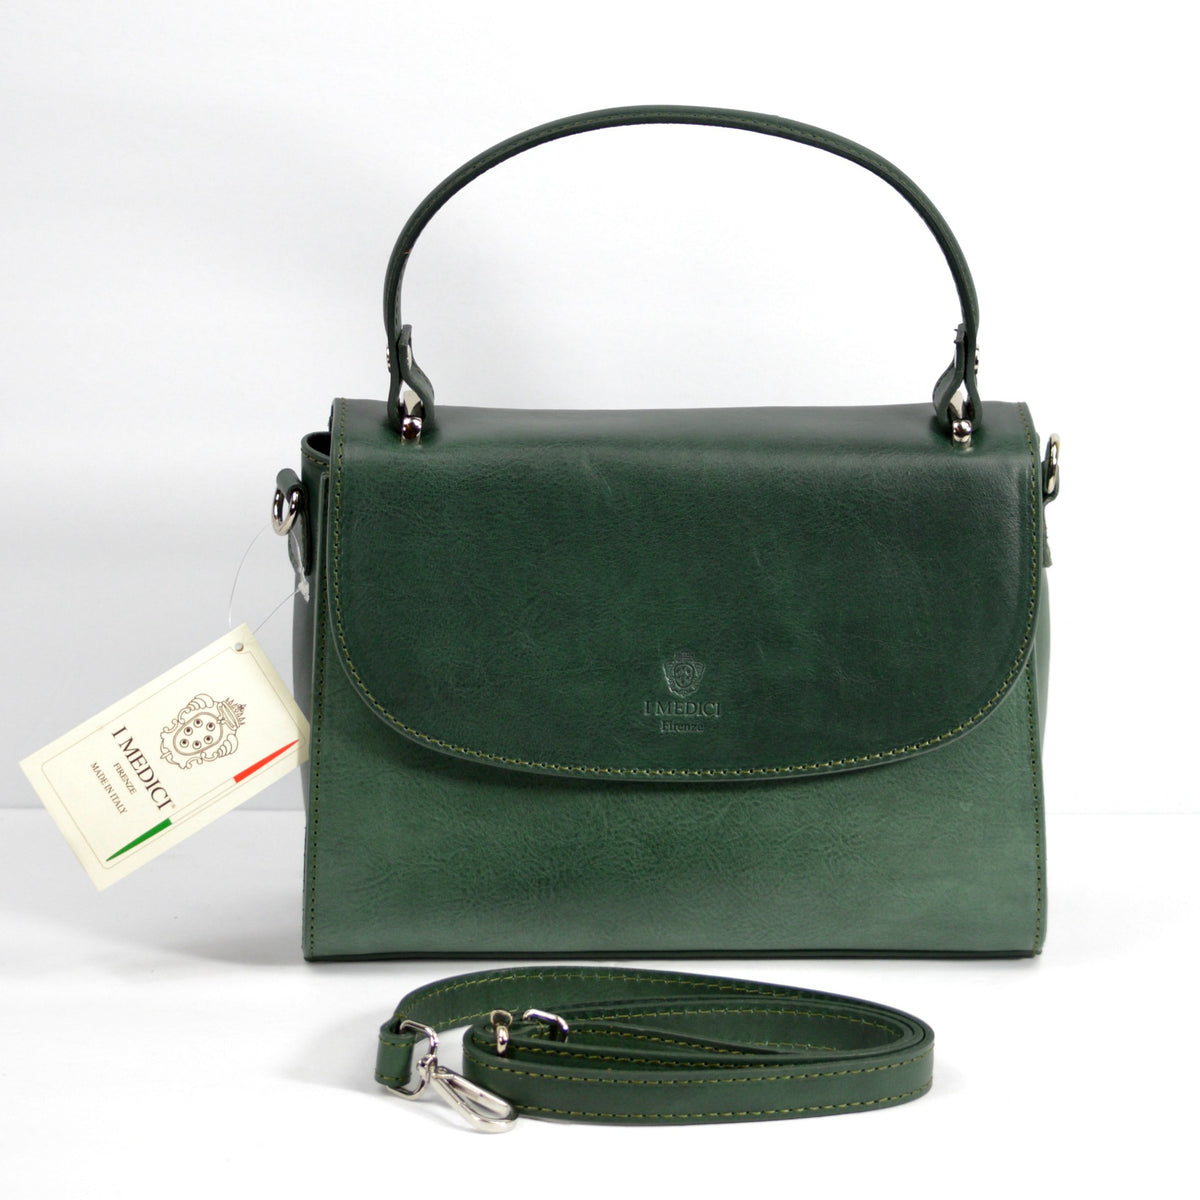 Lucera Italian Leather Handbag, Top Handle, Made in Italy - My Italian Decor